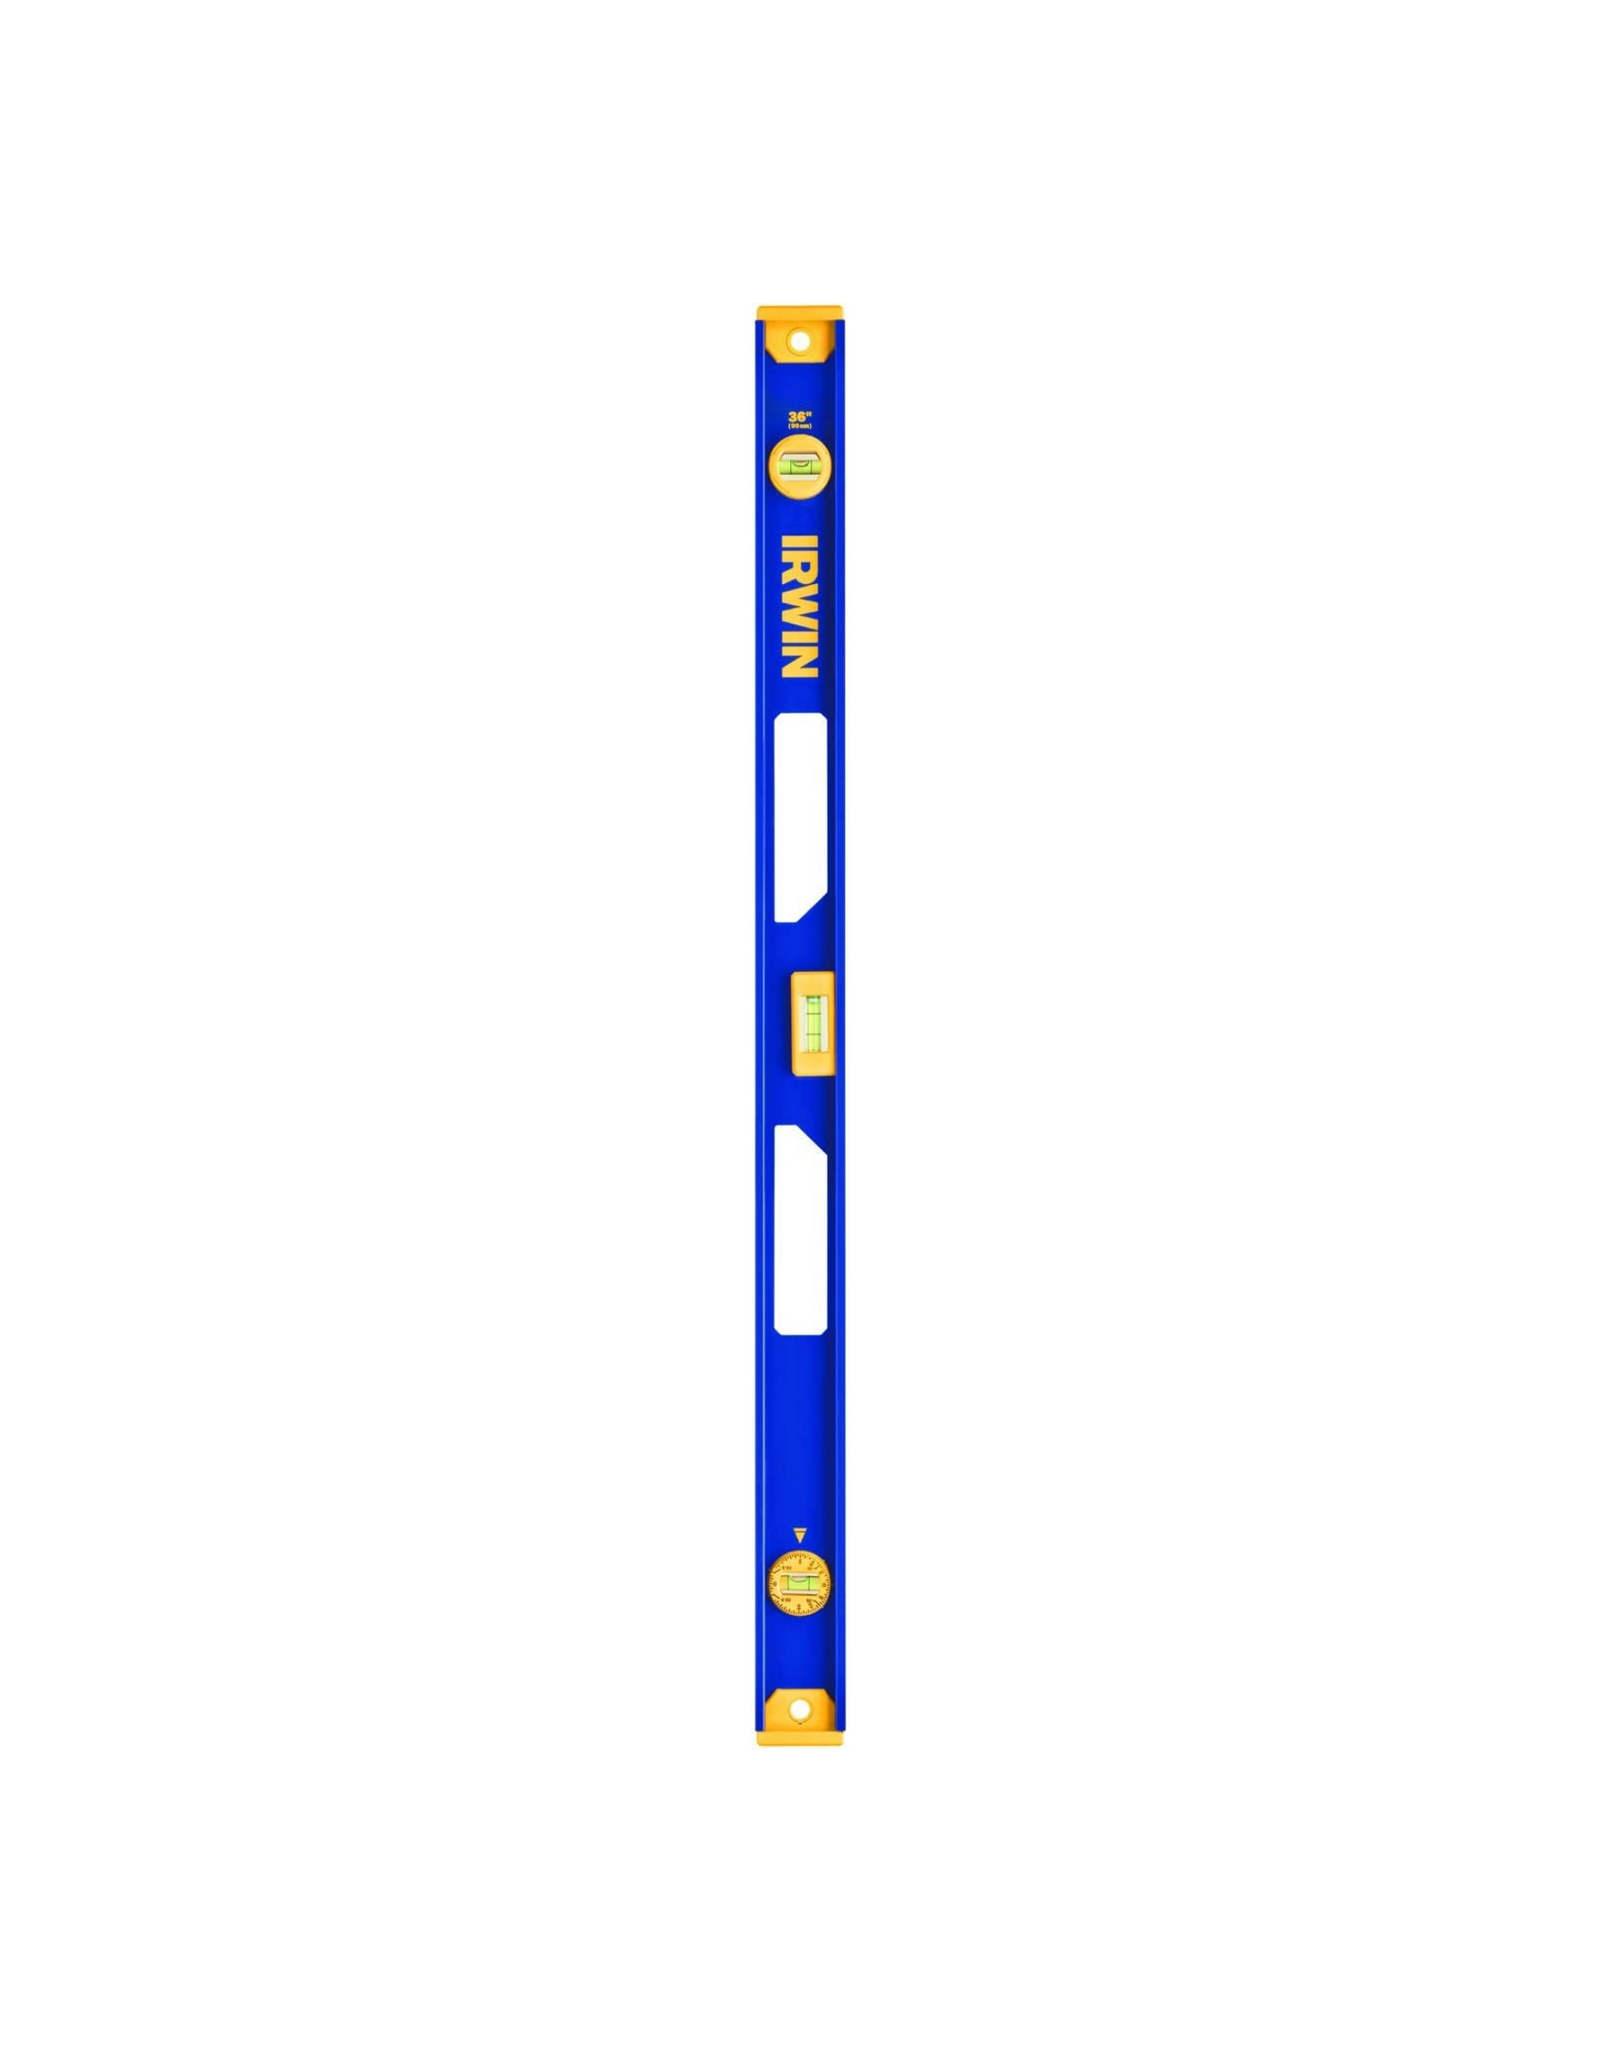 IRWIN Tools 1000 I-beam Level (1801092), 36 Inch, Blue